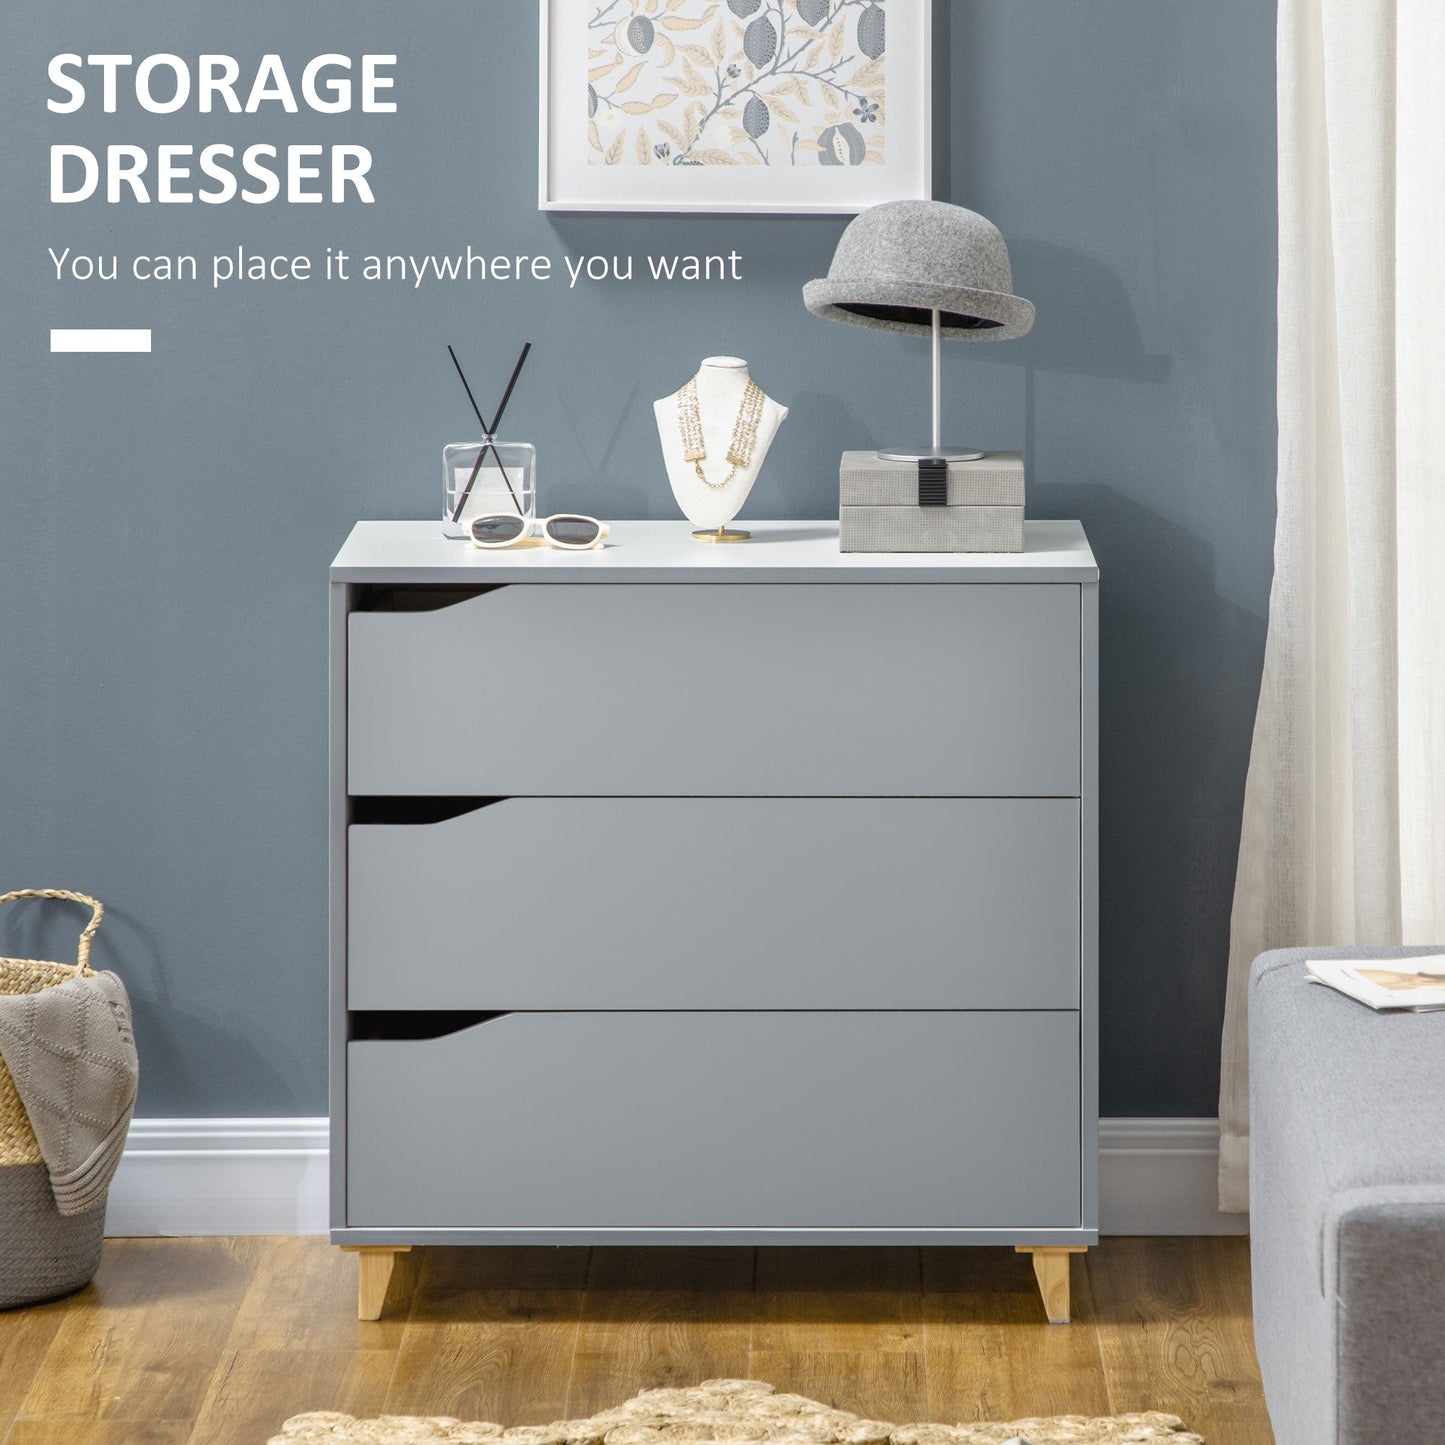 3-Drawer Storage Cabinet Unit with Pine Wood Legs 75cmx42cmx75cm - Grey/White